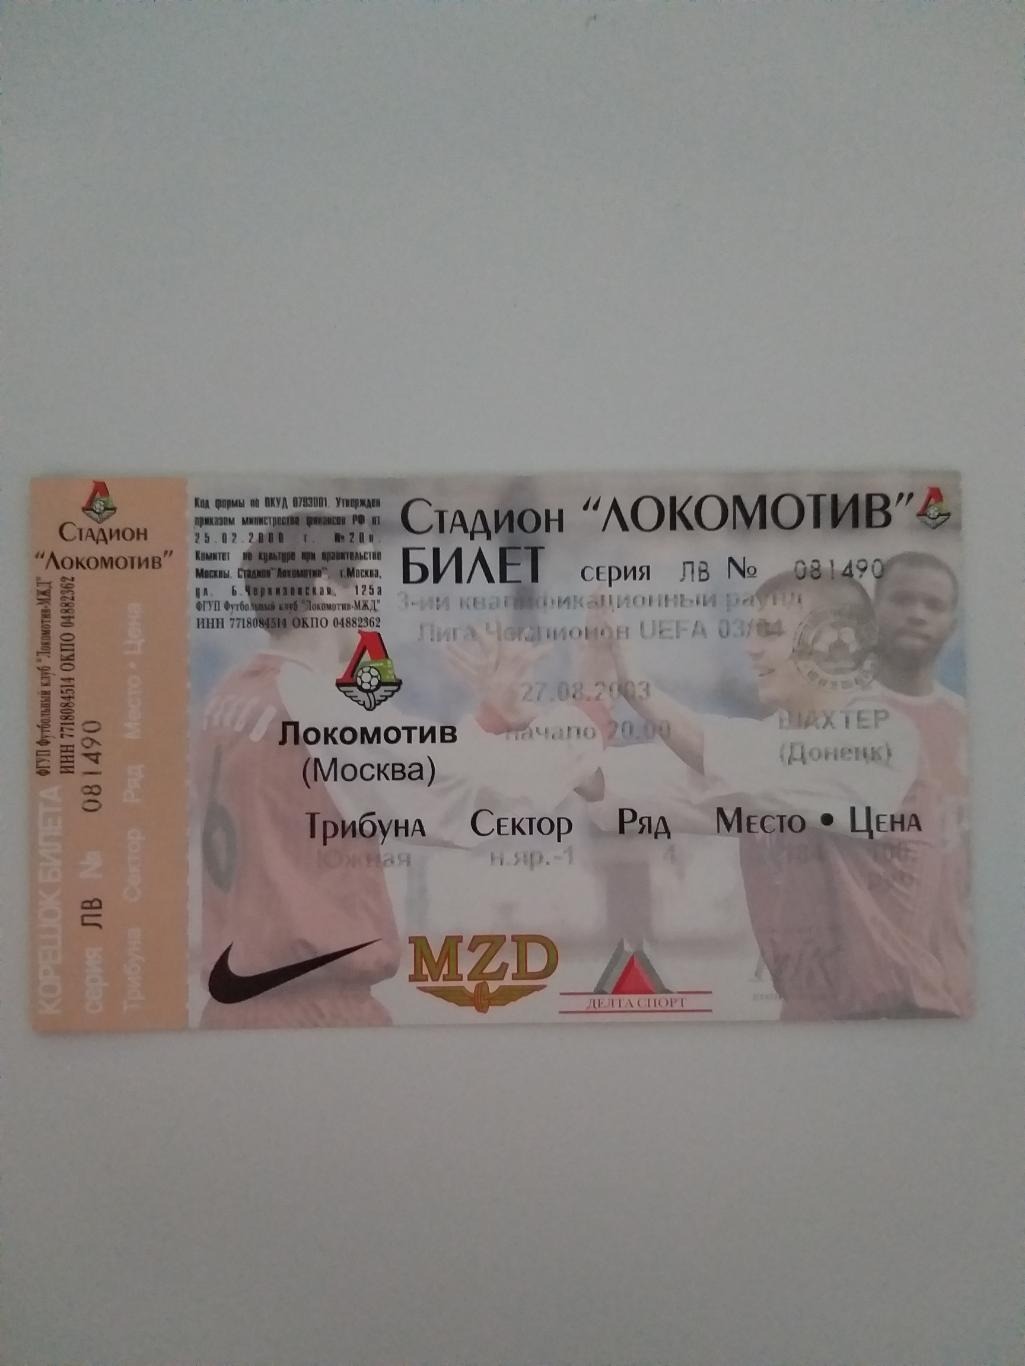 Локомотив(Москва)-Шахтер(Дон ецк) 2003 билет